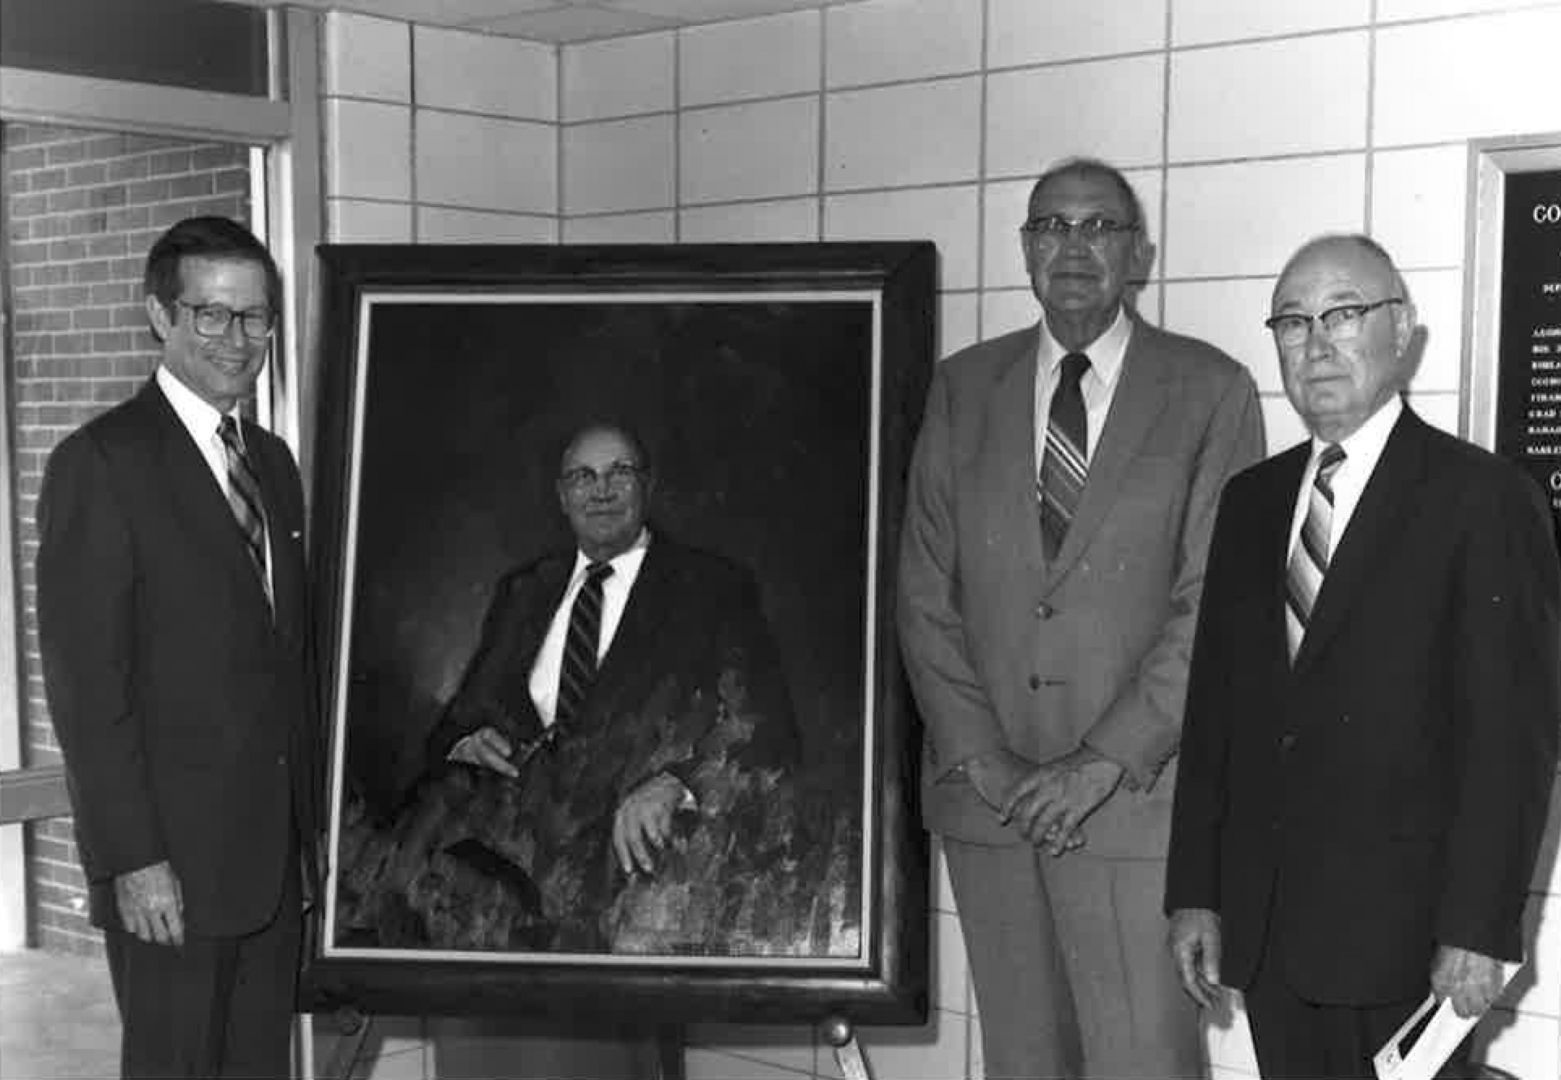 Men pictured with portrait of Dr. Joseph Greene